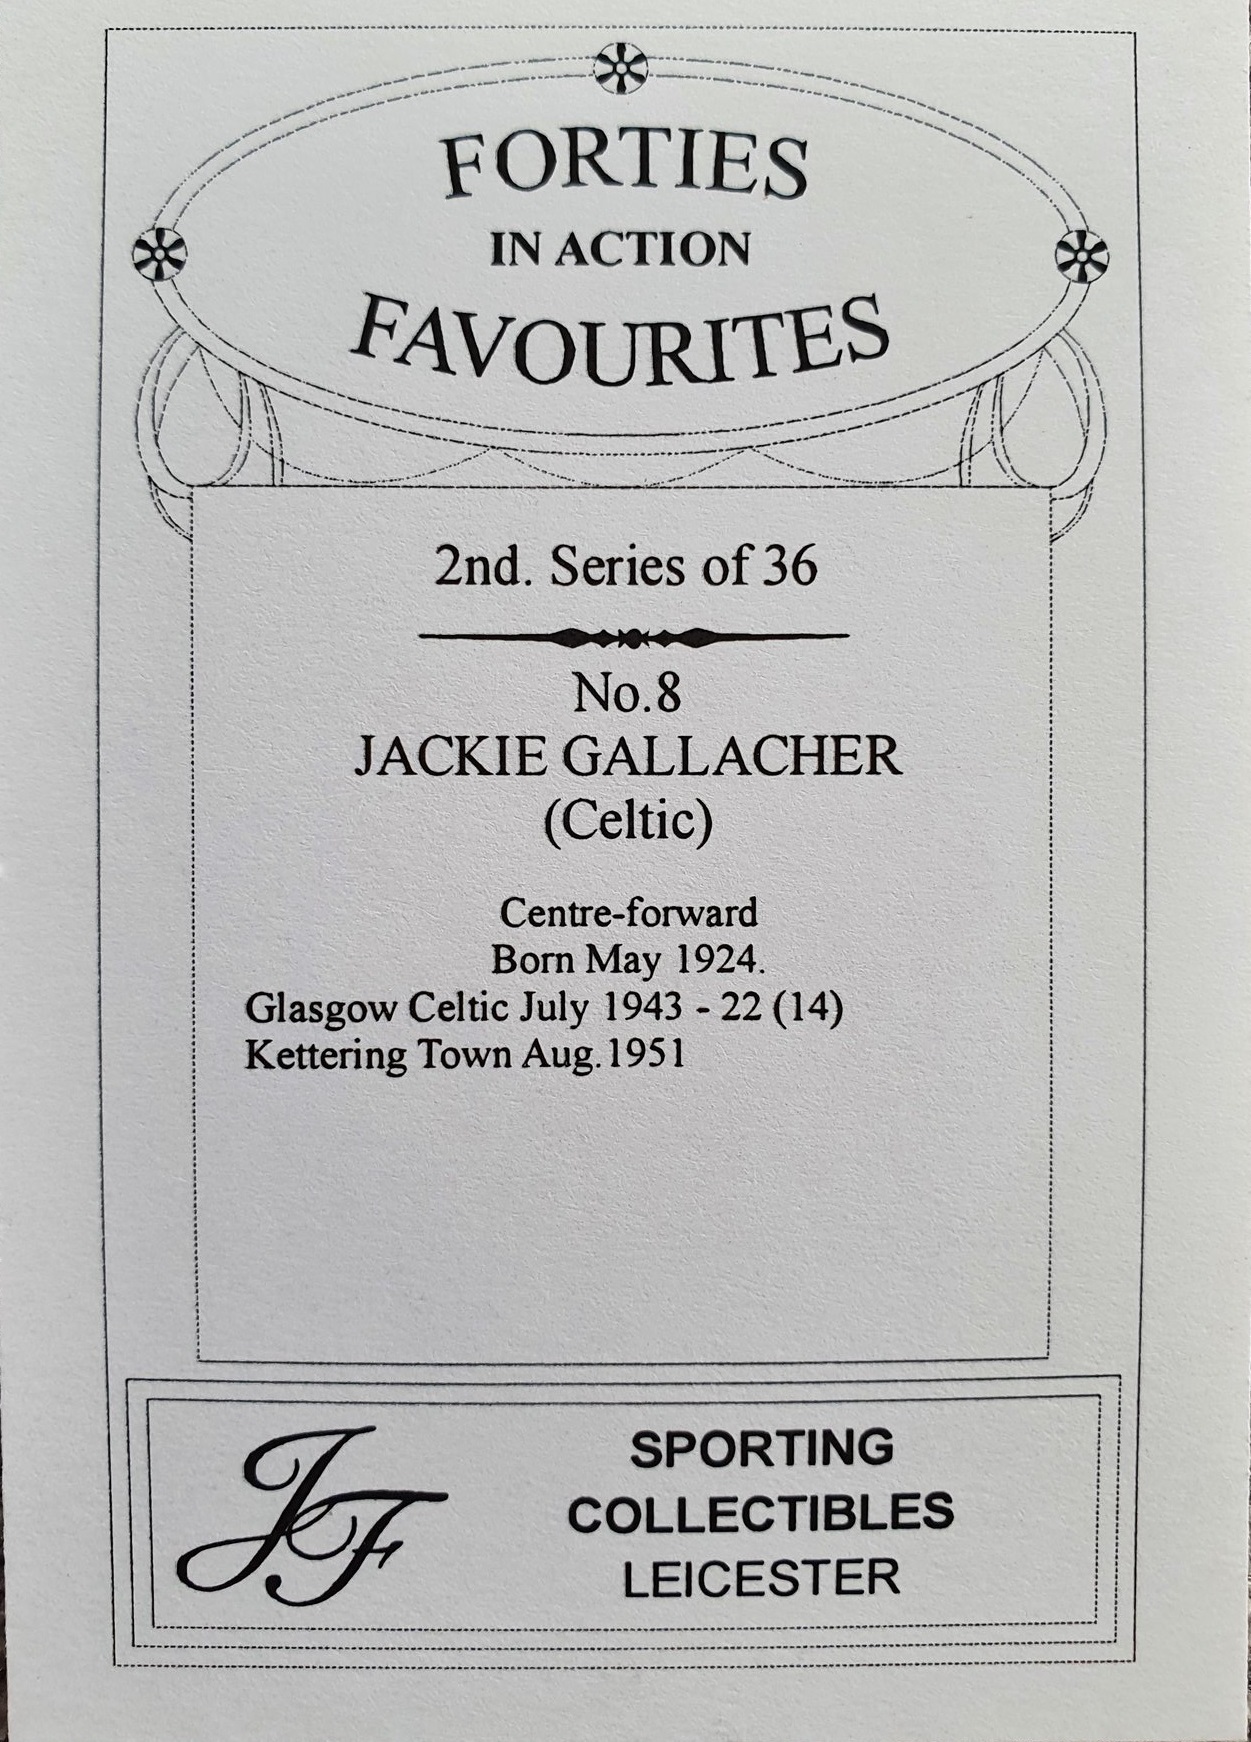 Jackie Gallacher